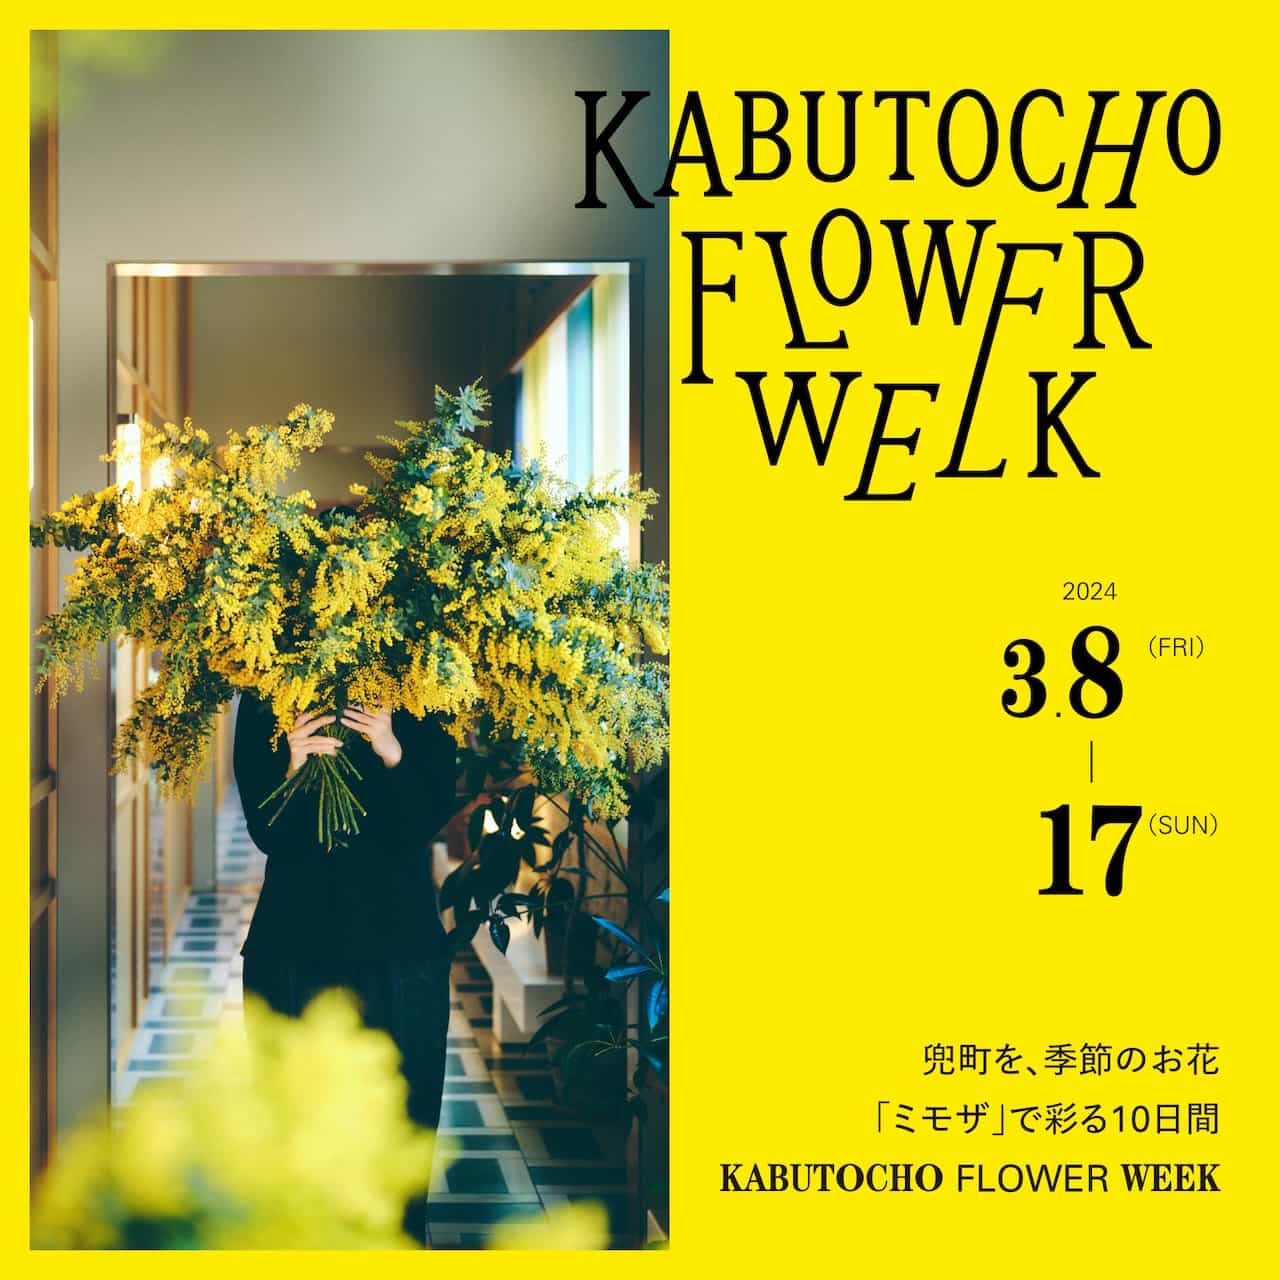 ABUTOCHO FLOWER WEEK